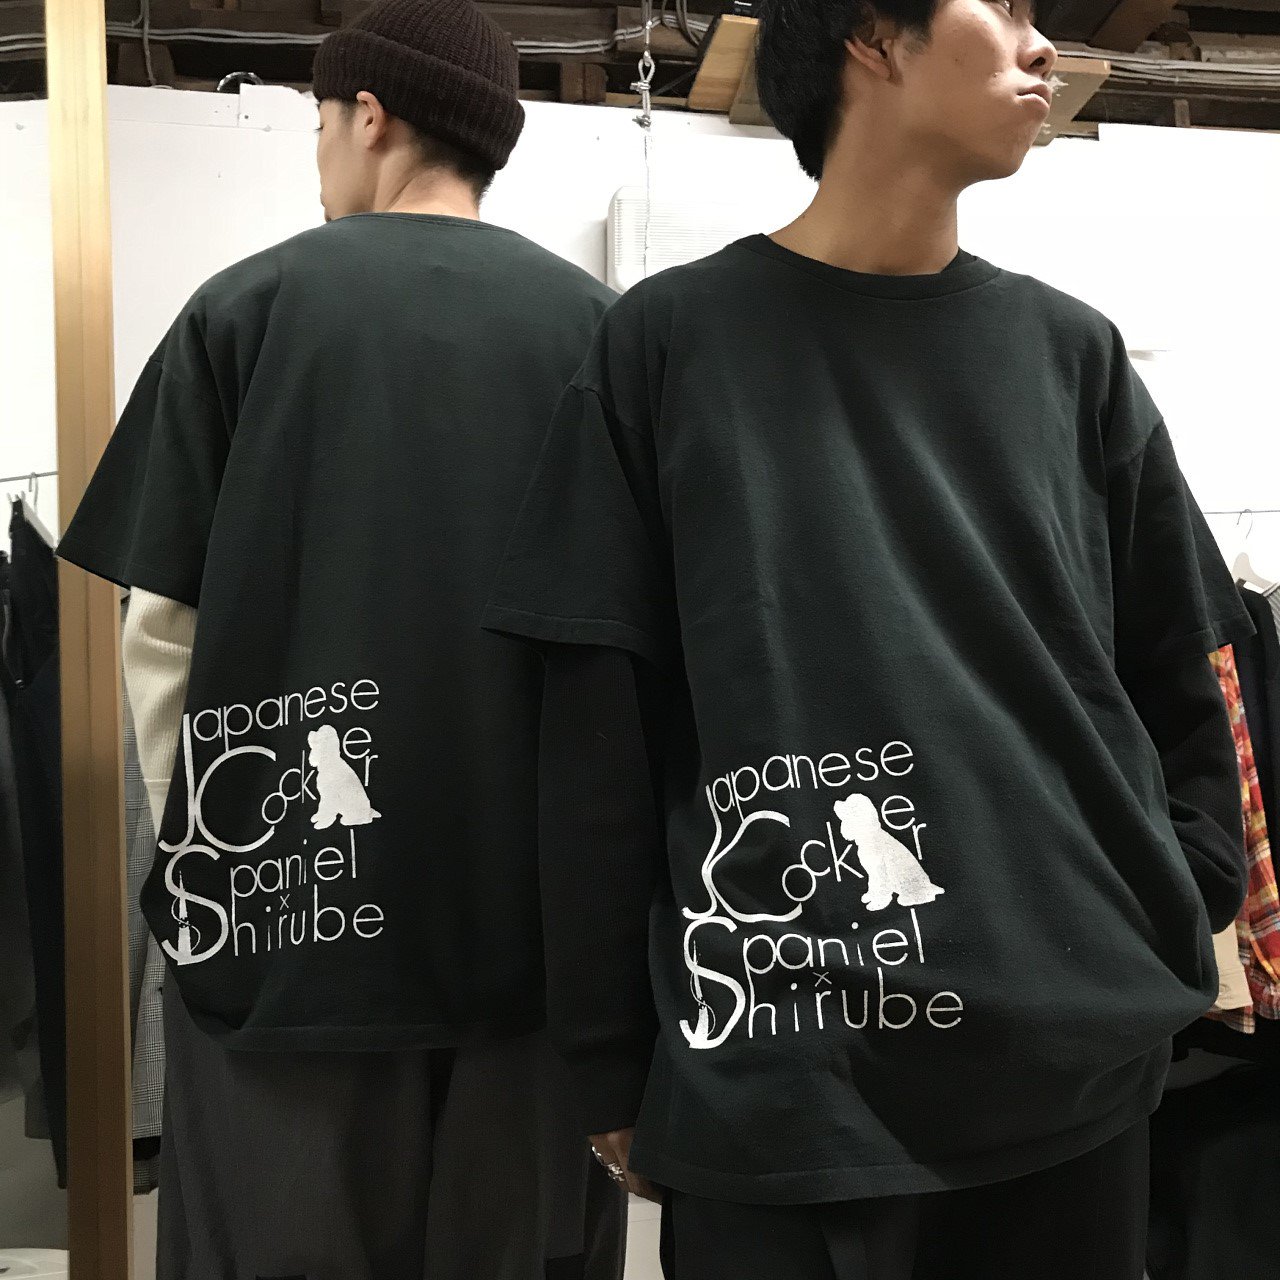 Japanese Cocker Spaniel×Shirube コラボTshirt